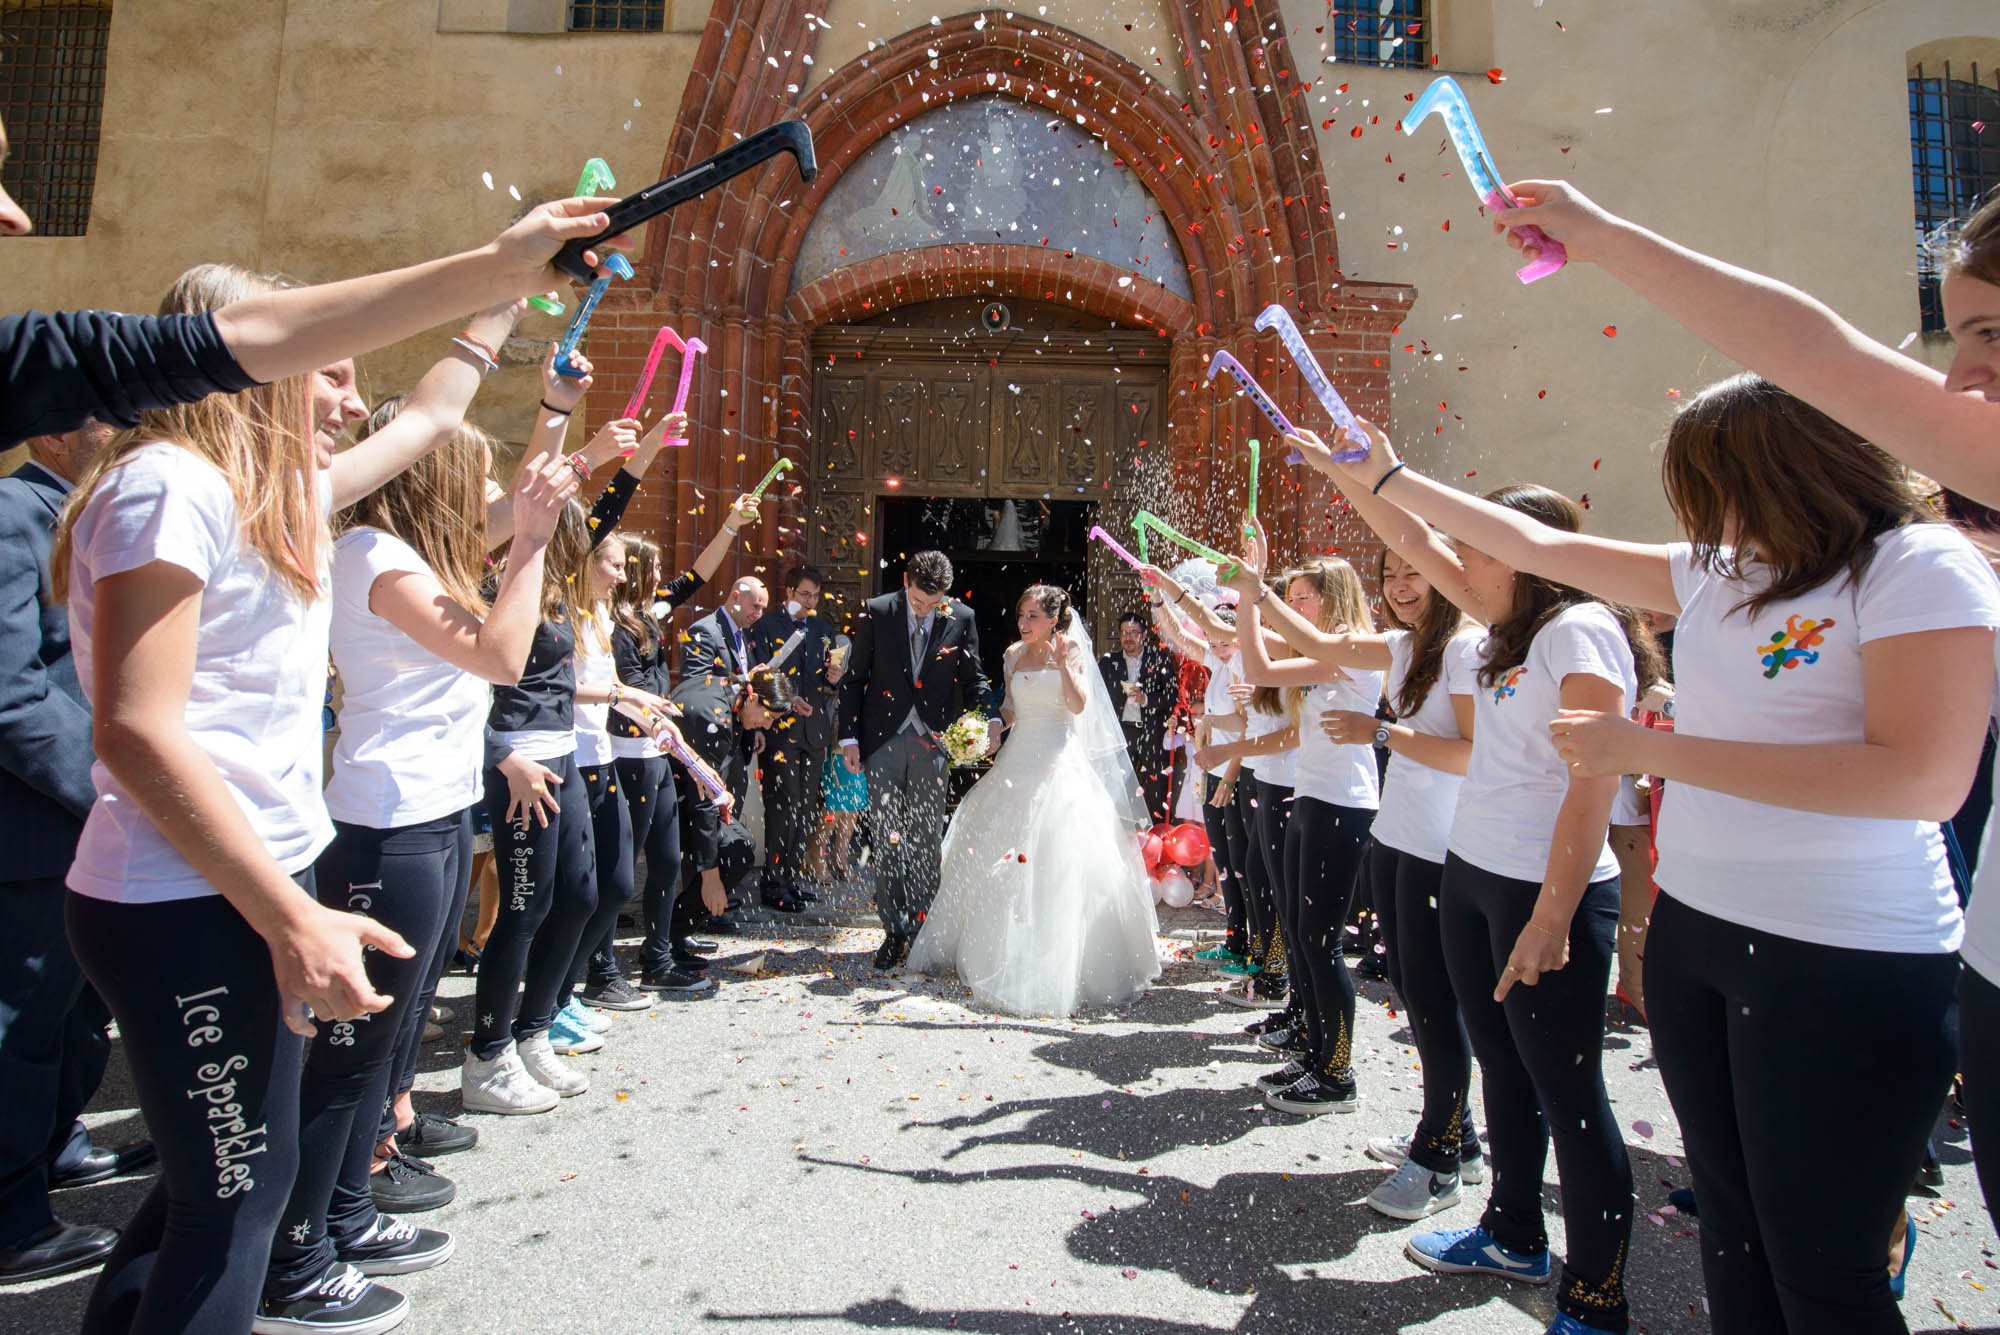 Valsesia Wedding - Servizi fotografici per matrimoni, Borgosesia, Varallo, Valsesia, Piemonte